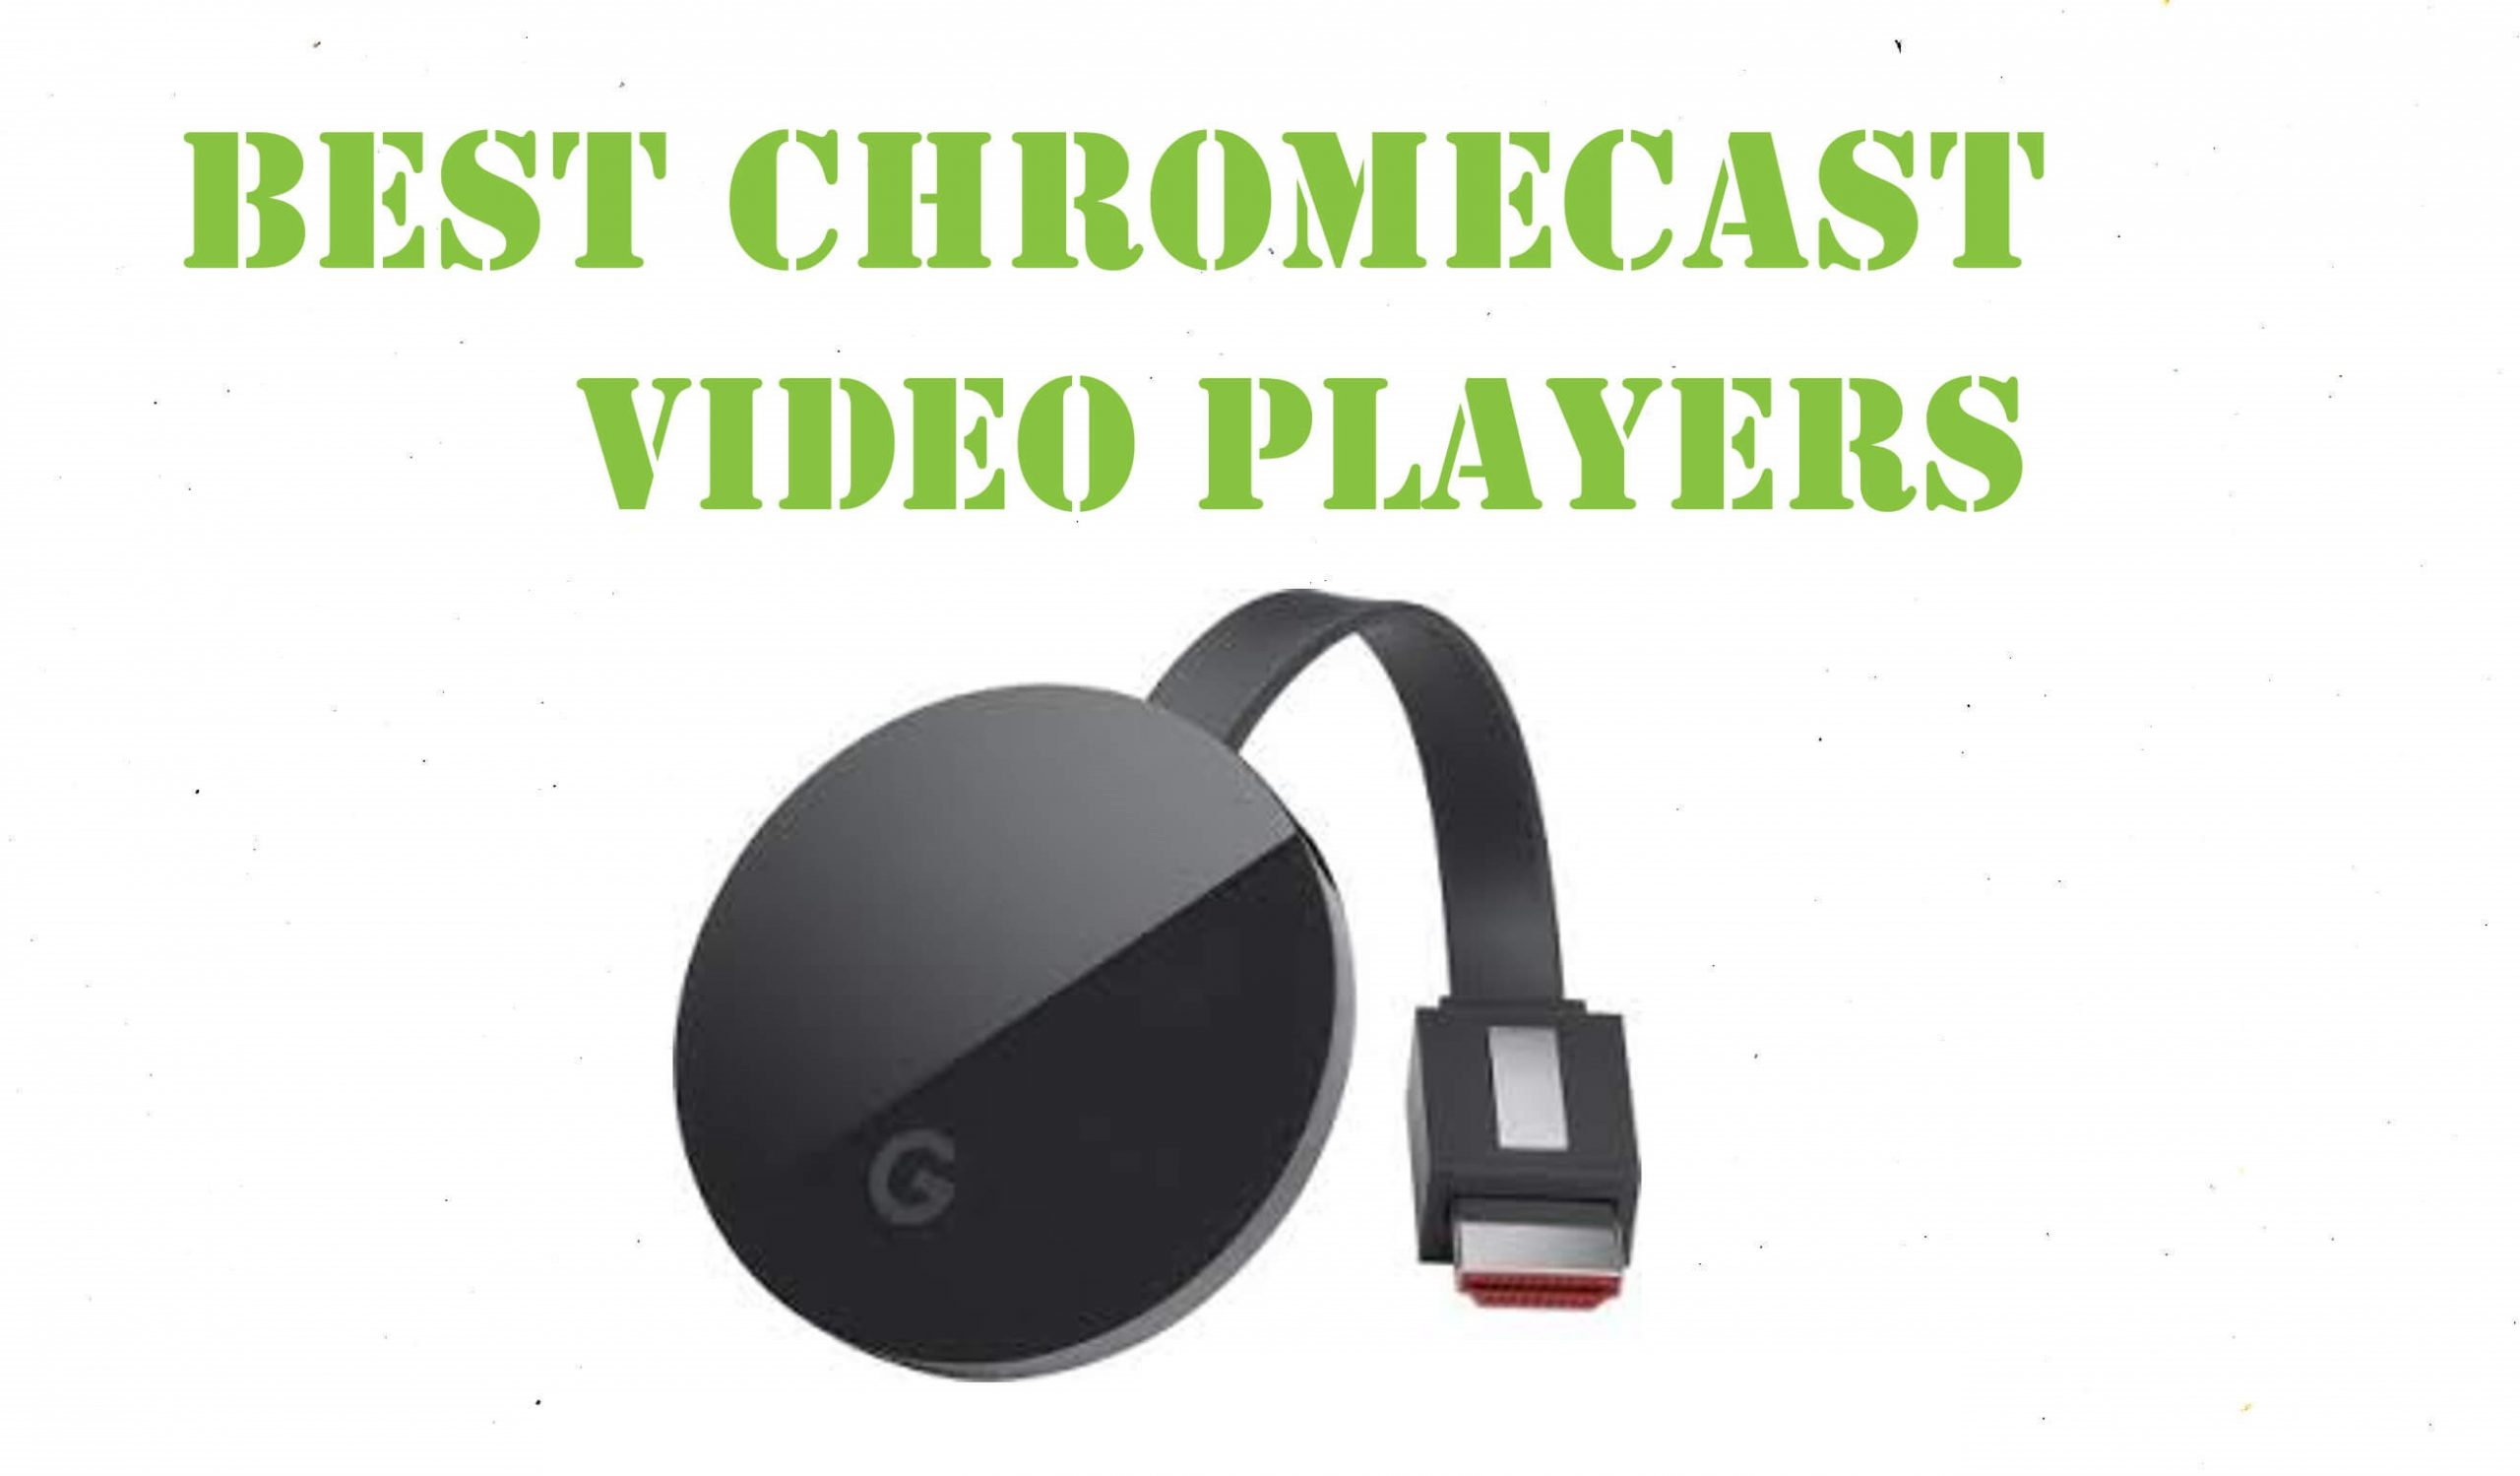 cast to chromecast from ipad